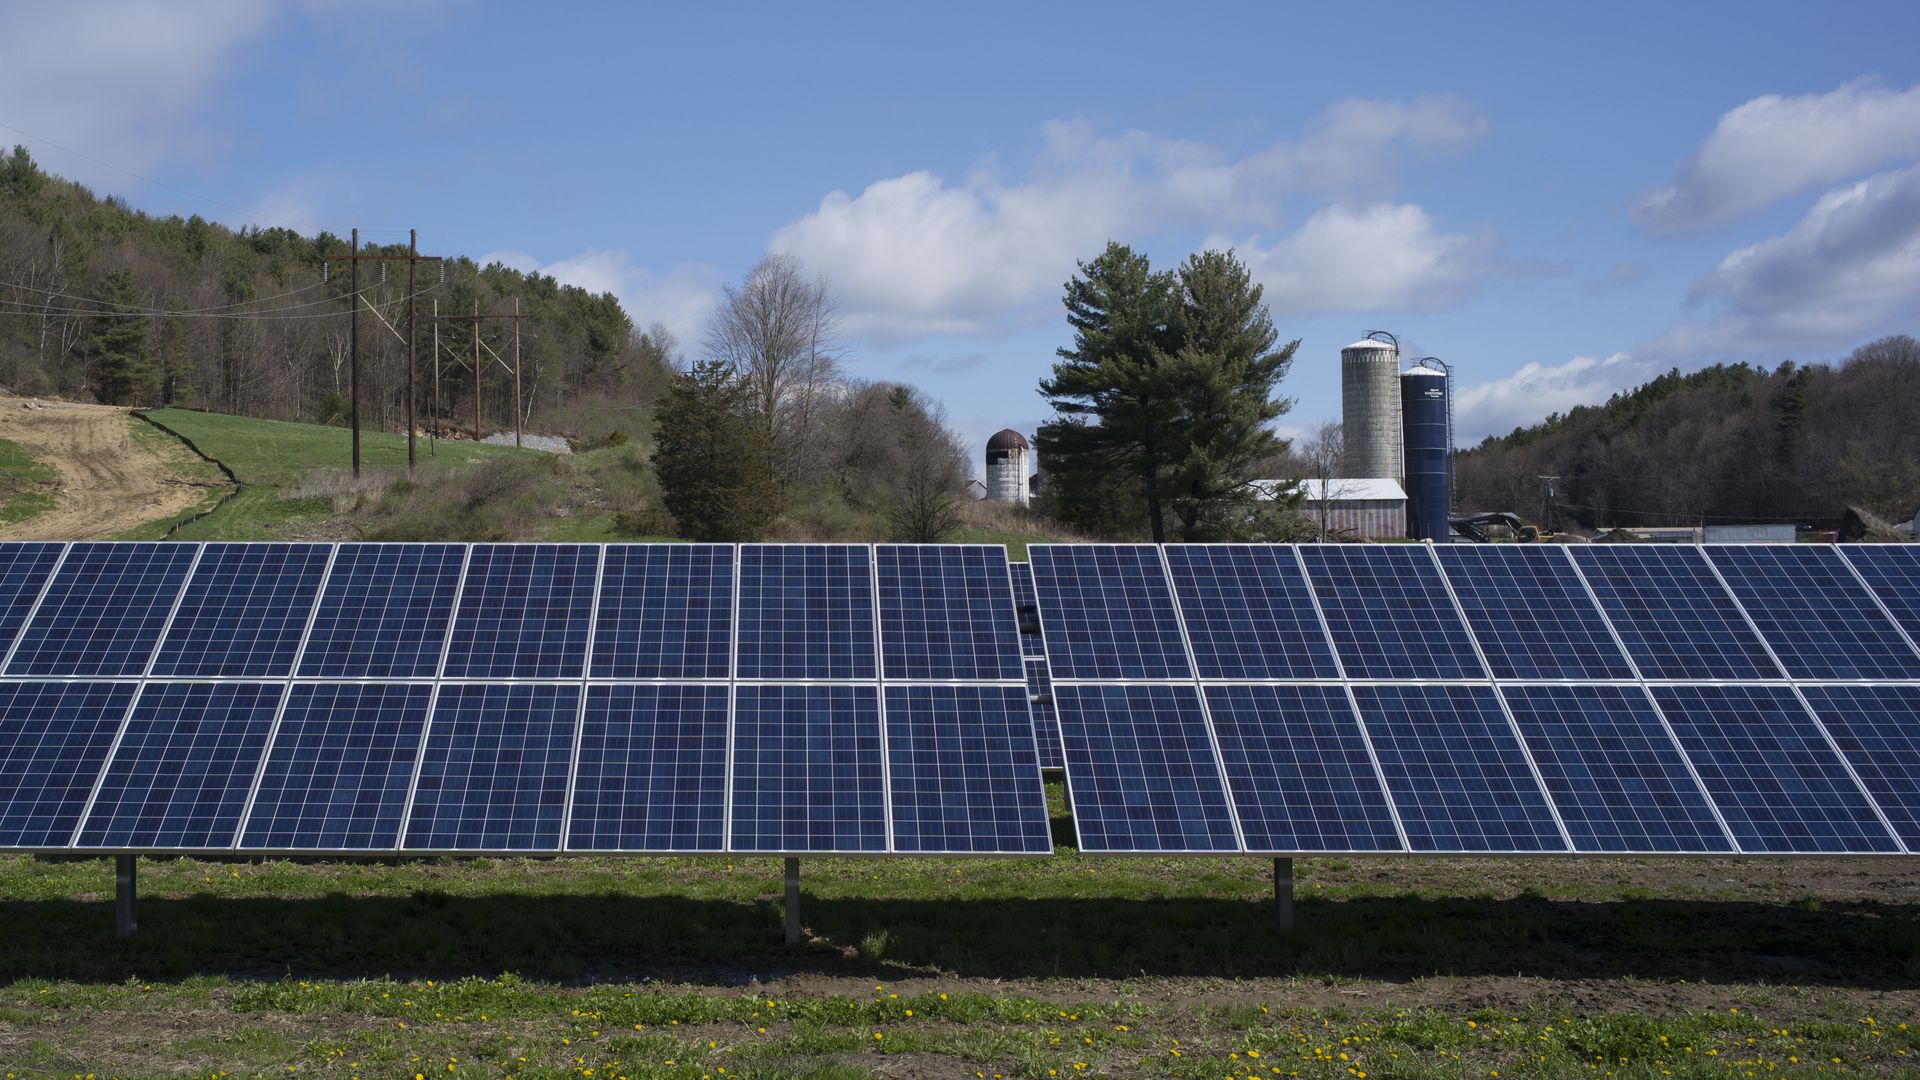 Solar panels near a dairy farm in Vermont.